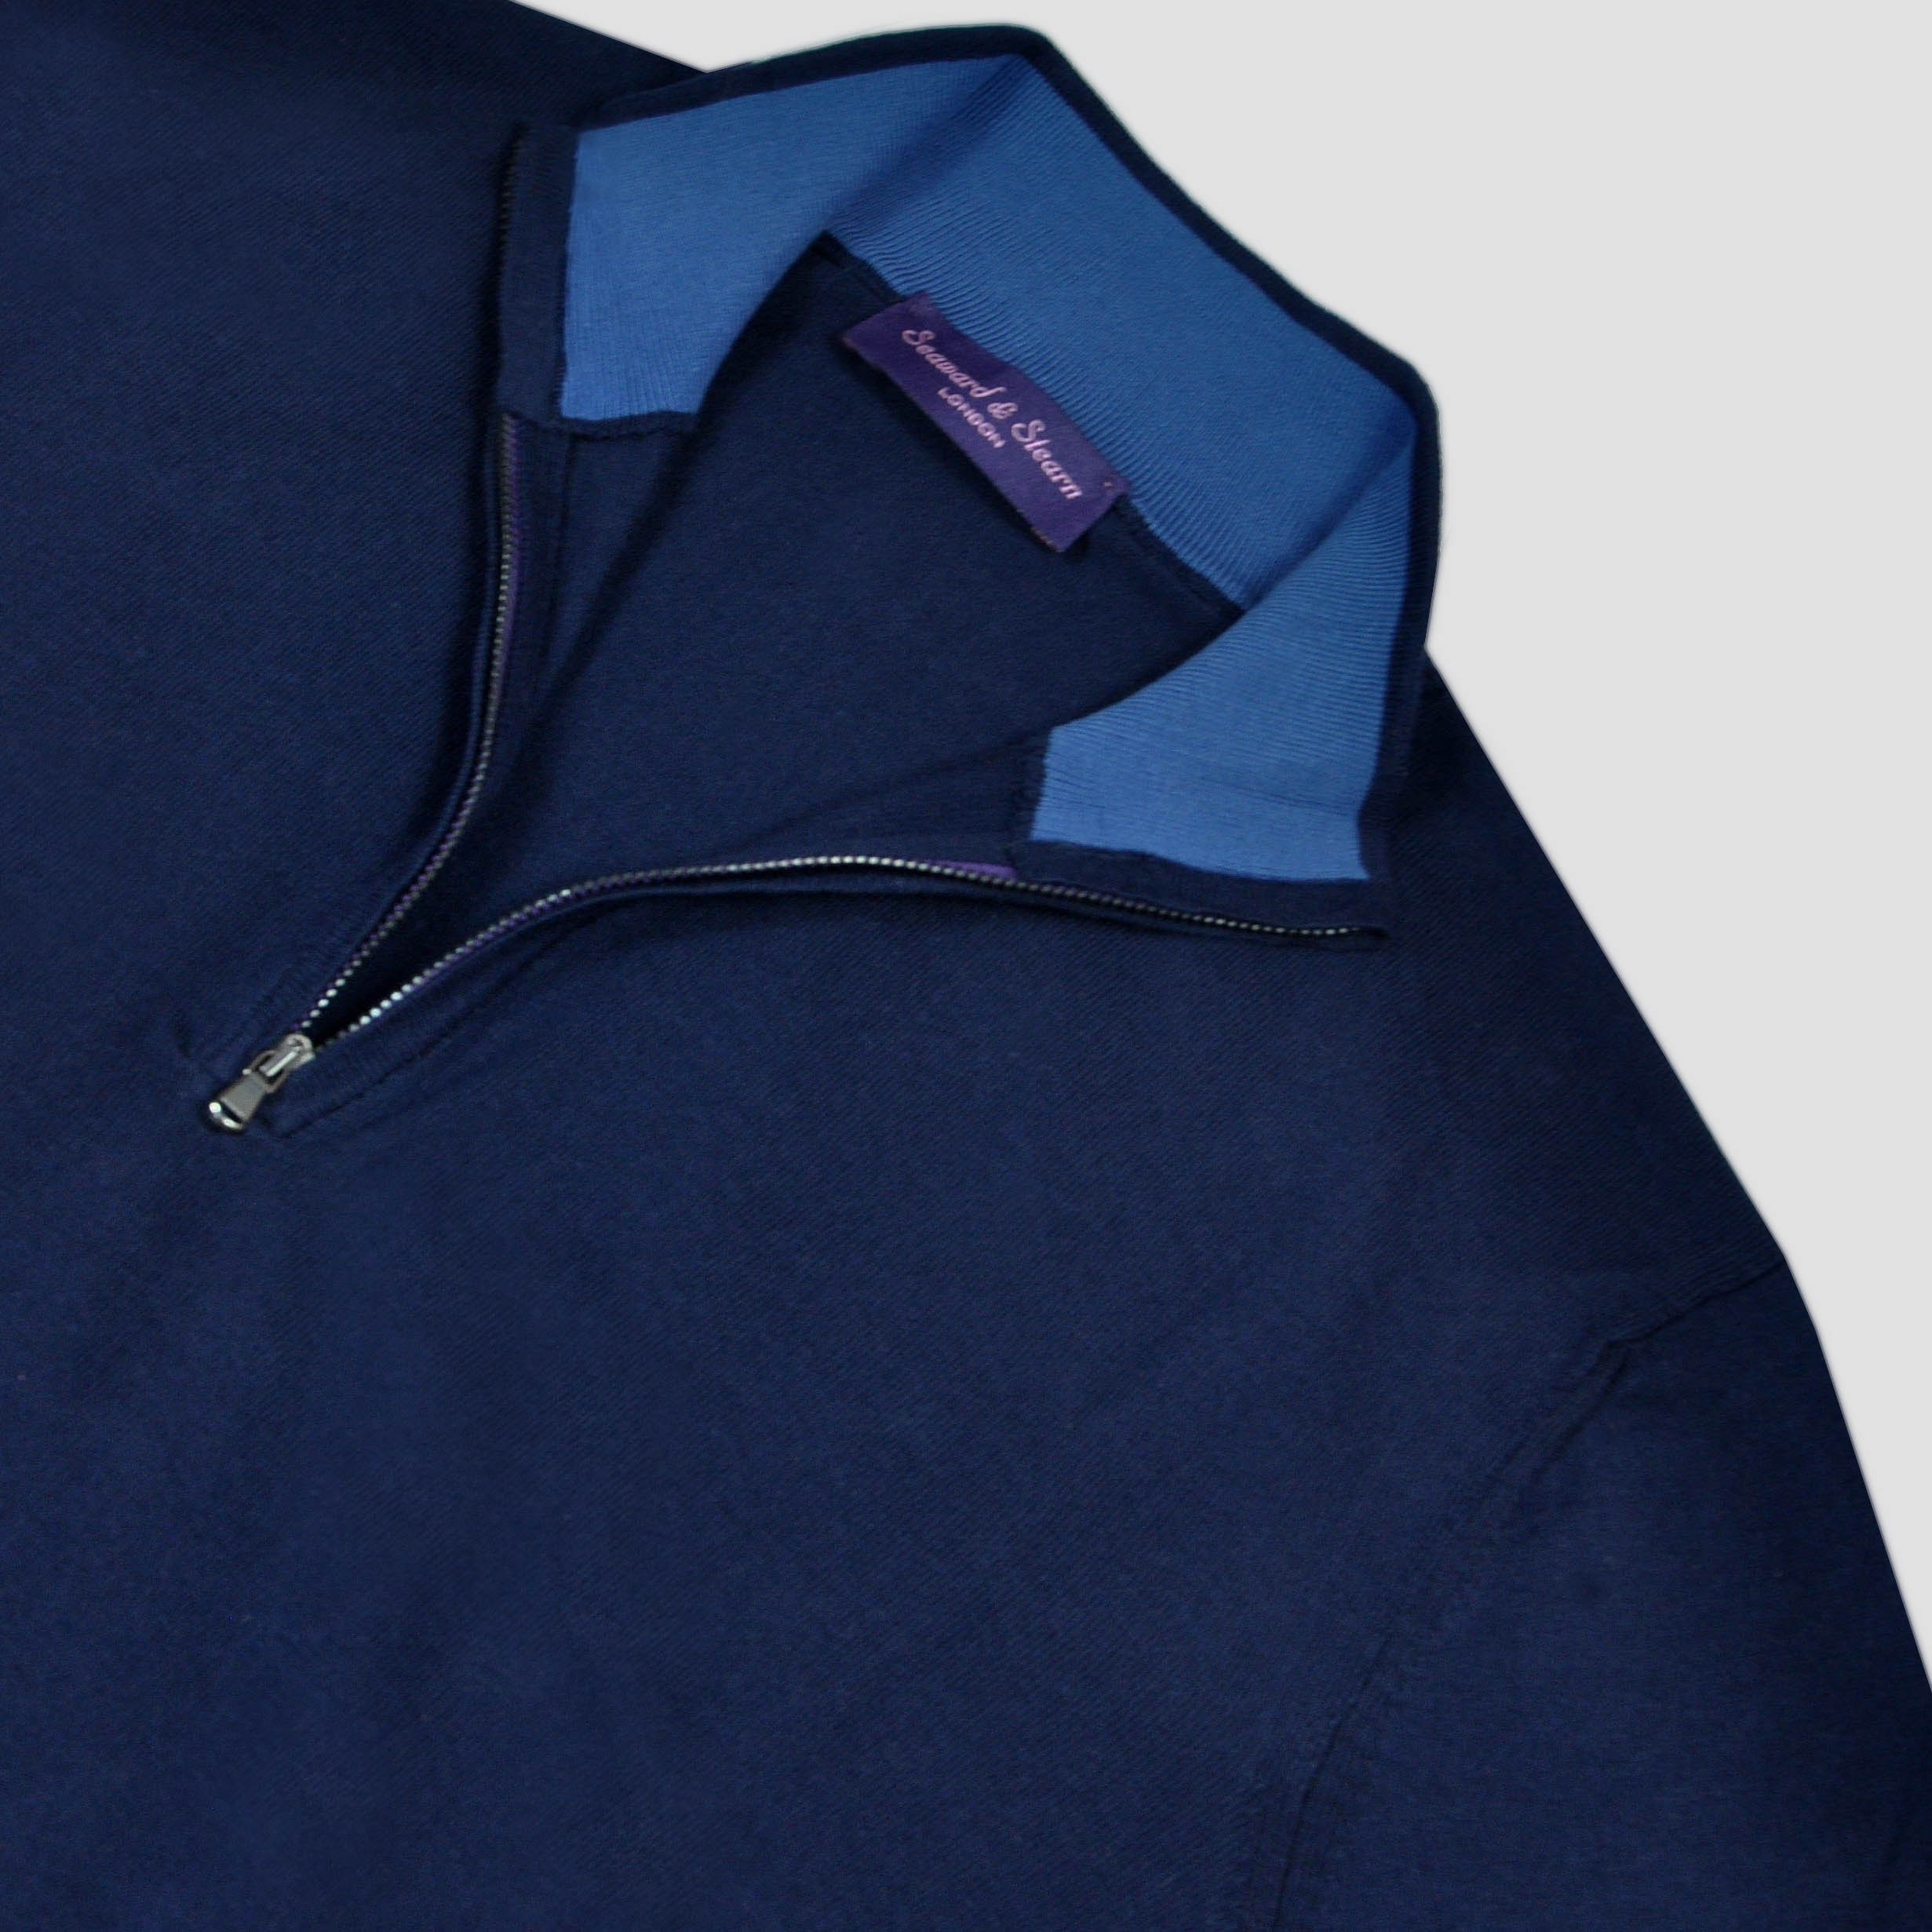 Fine Cotton Quarter Zip Collar in Navy with Light Blue Collar